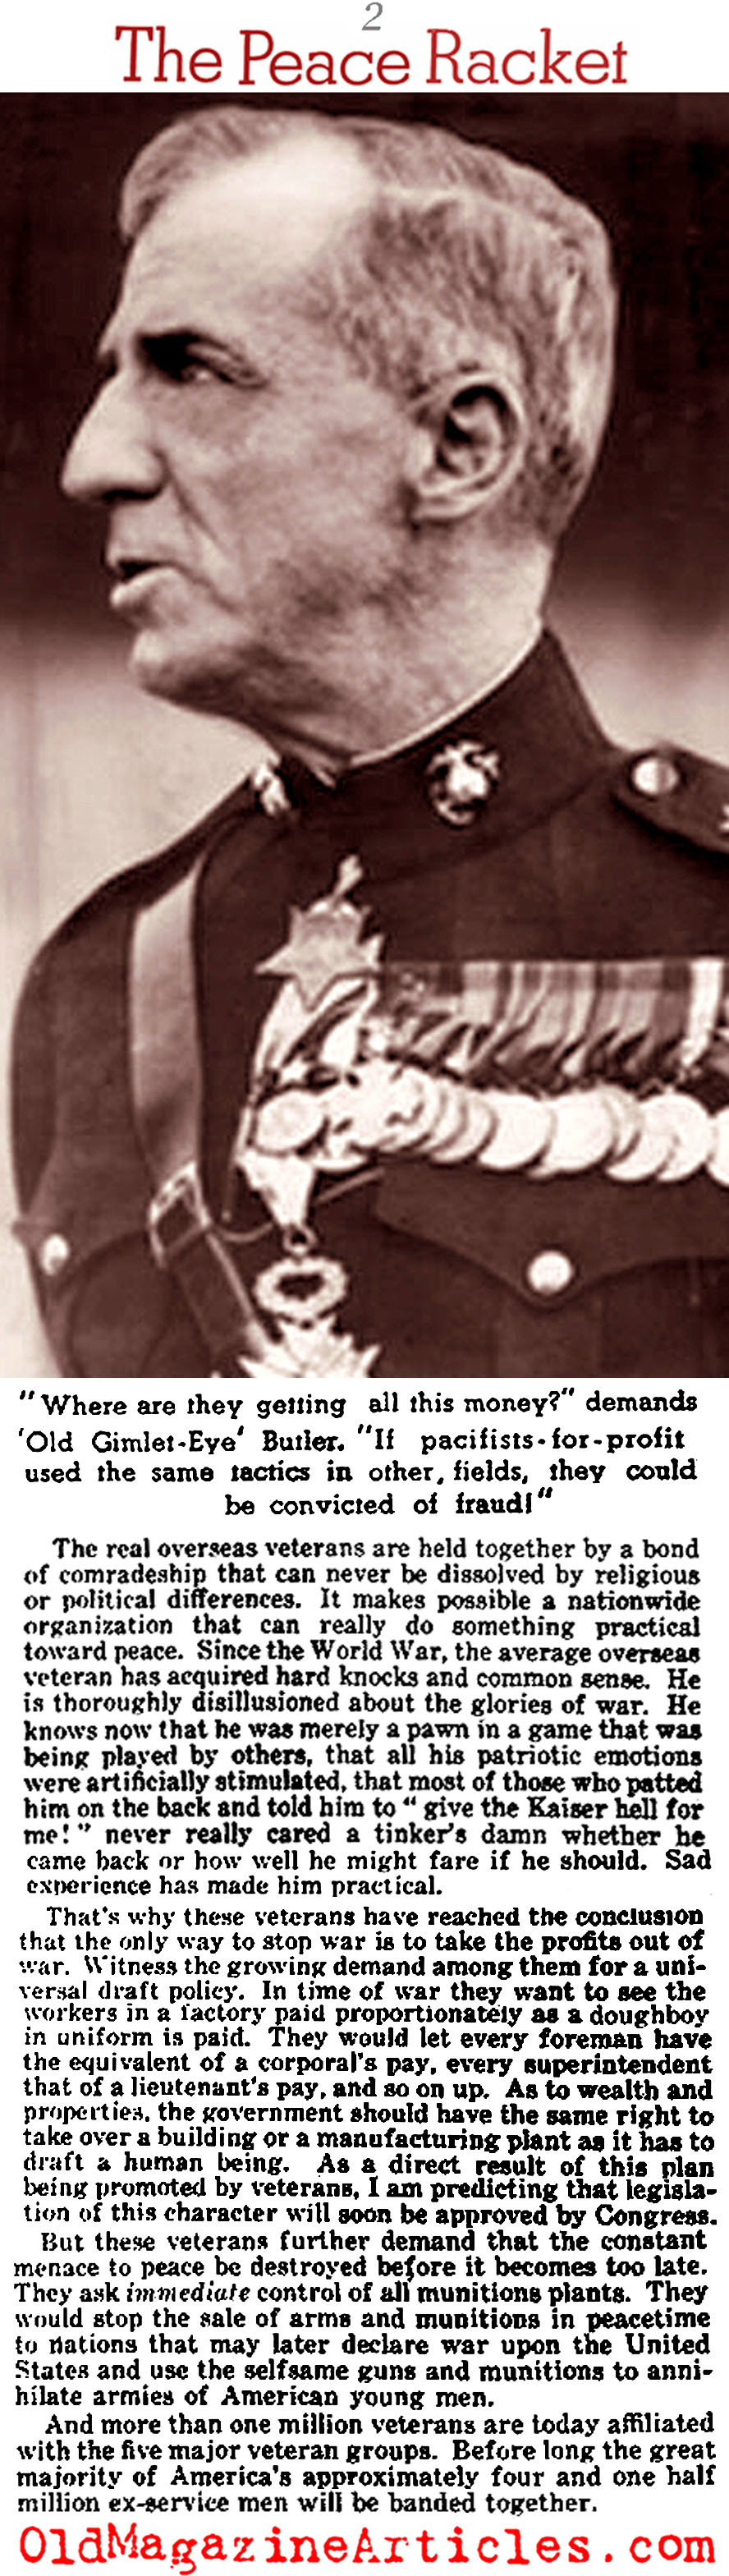 Smedley Butler on Peace (Liberty Magazine, 1936)